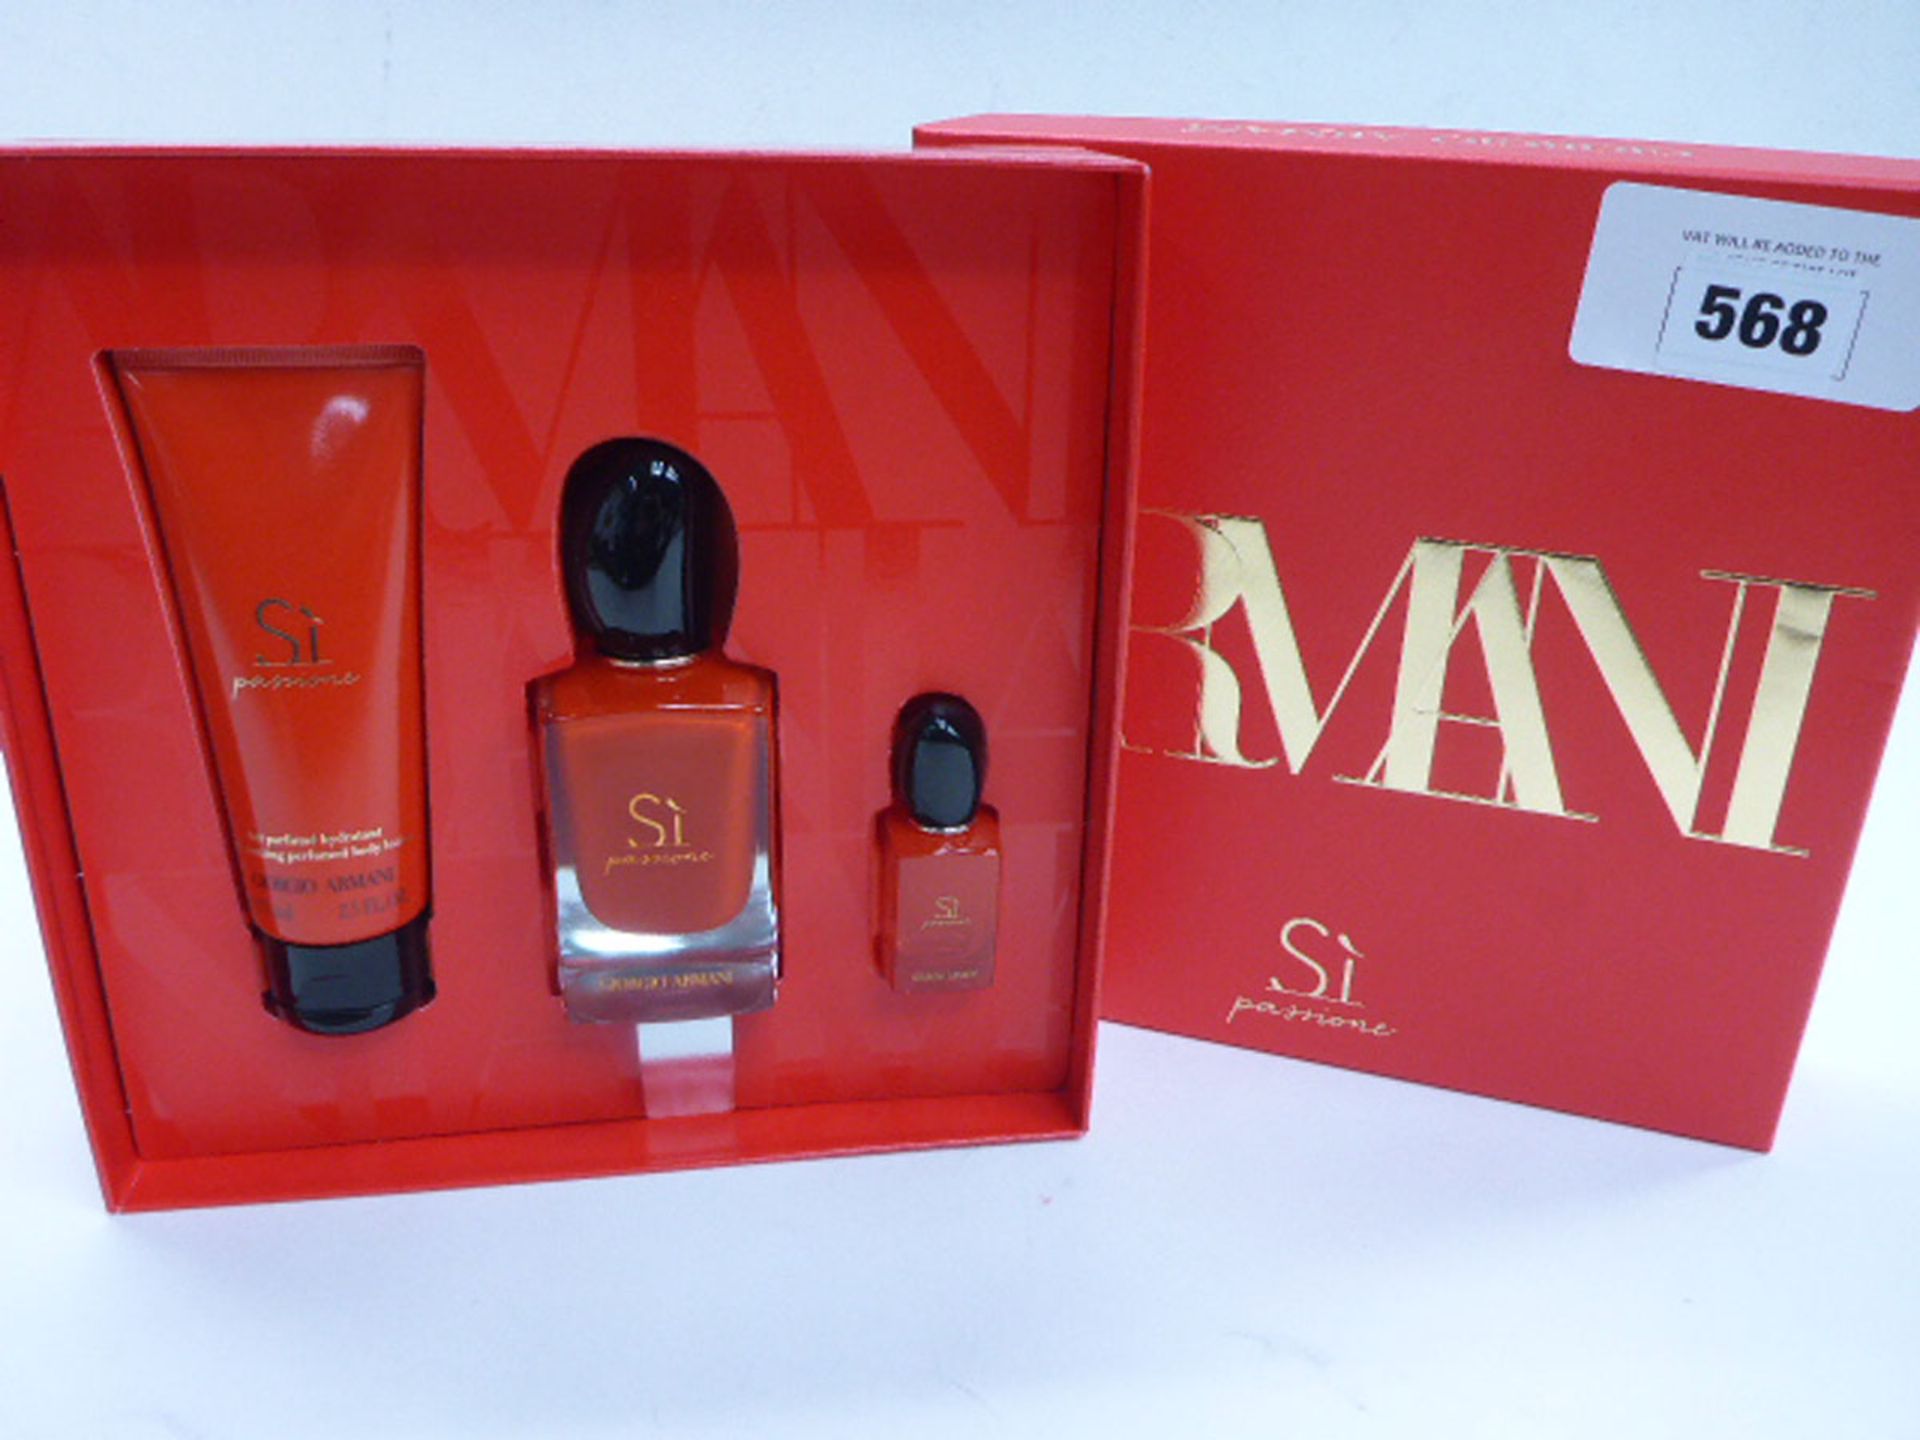 Armani Si Passione eau de parfum and body lotion gift box set